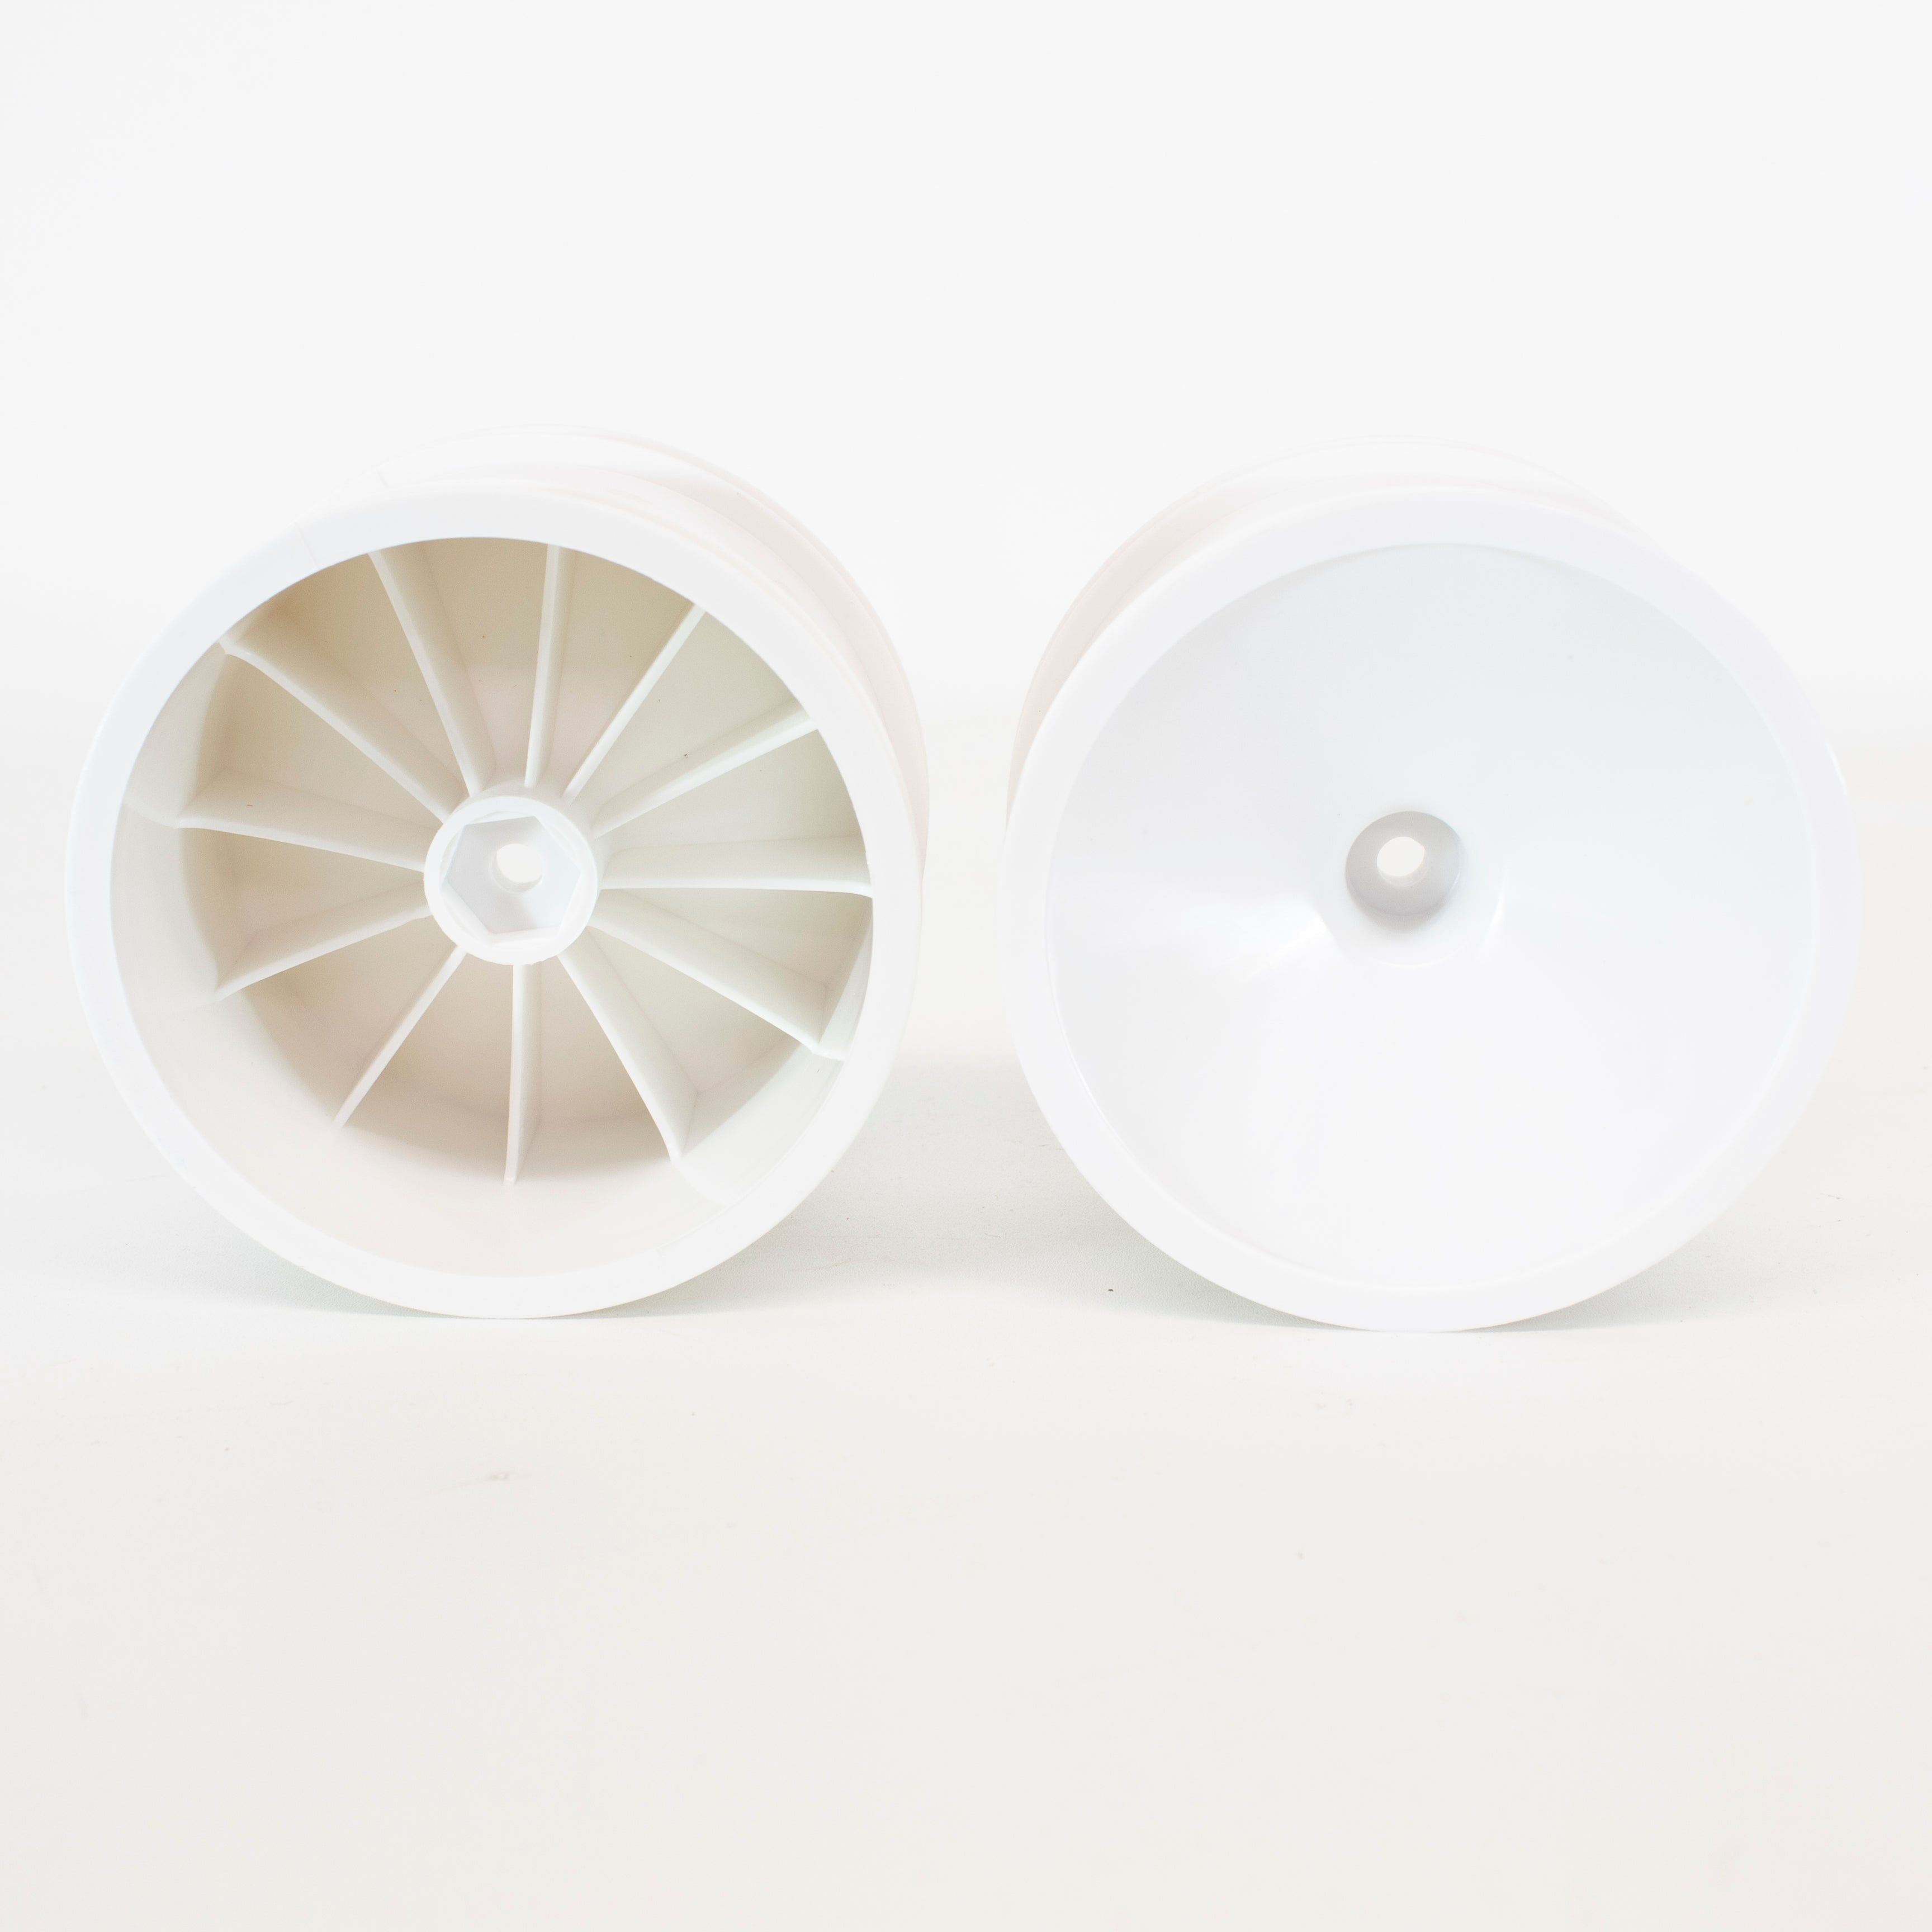 IMEX 2.8 White Dish Rims (1 pair) Front